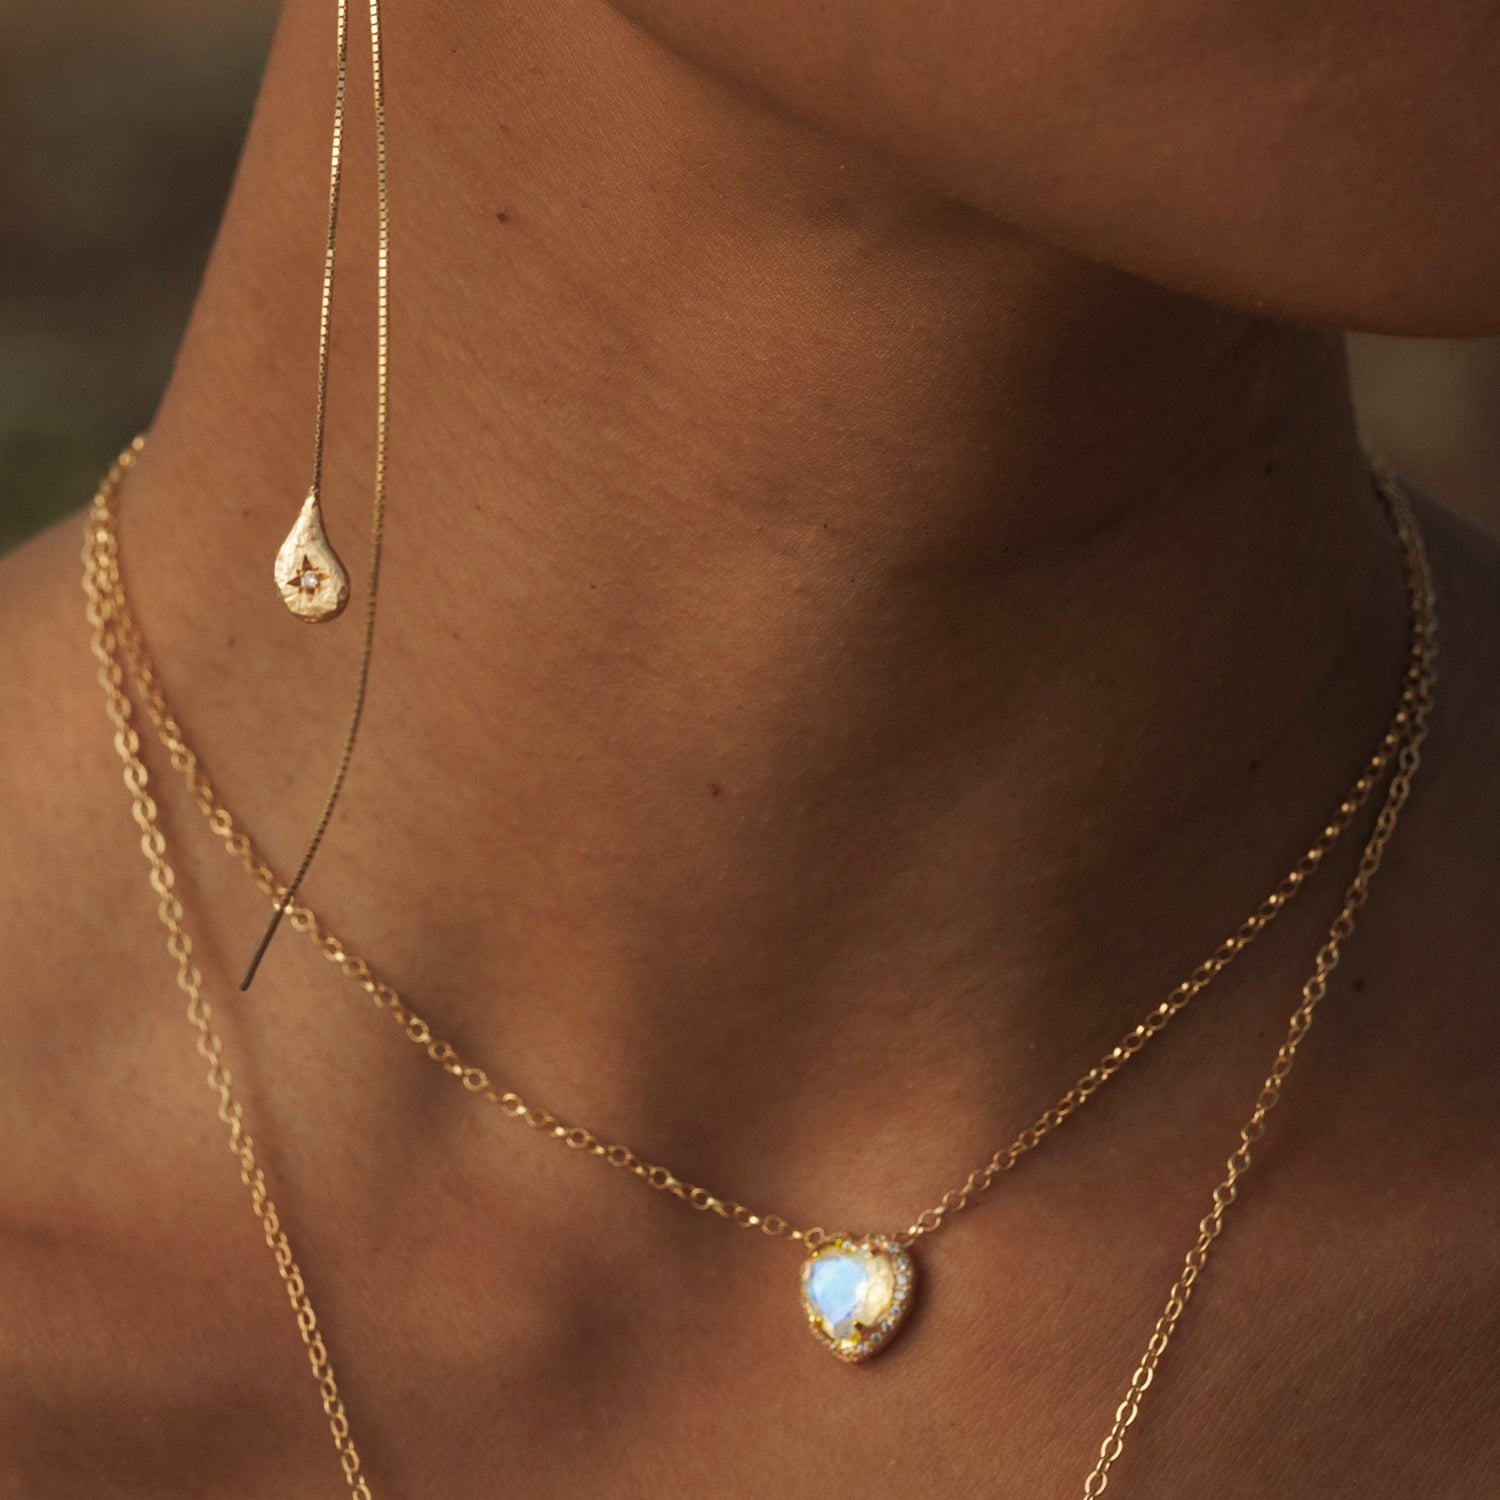 Baby Inanna Necklace - Moonstone & Diamonds - Danielle Gerber Freedom Jewelry